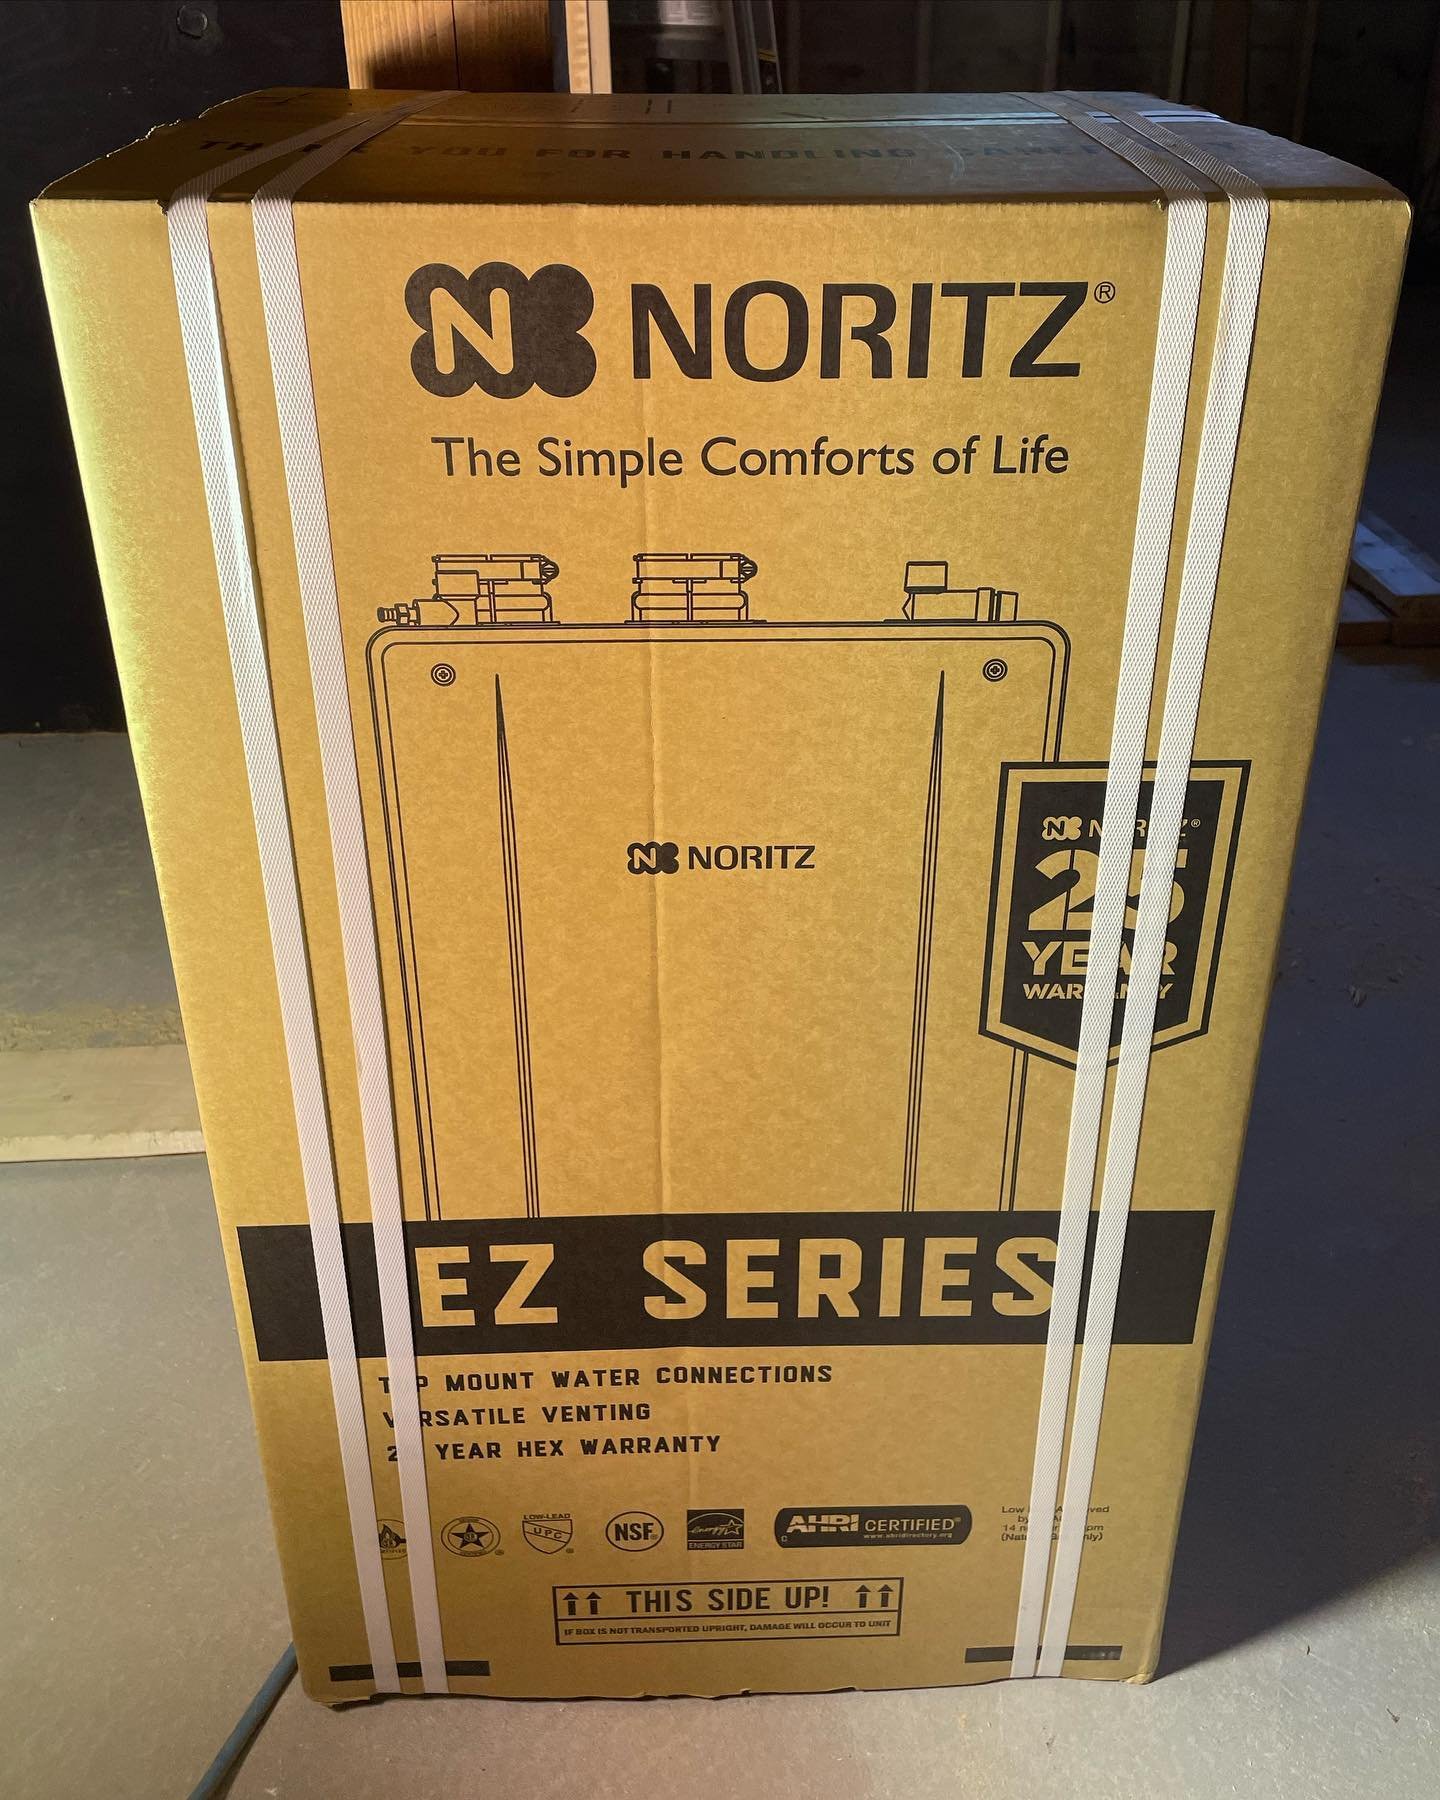 Noritz Ez Series with an RPK. A clean job site allows for clean installs!